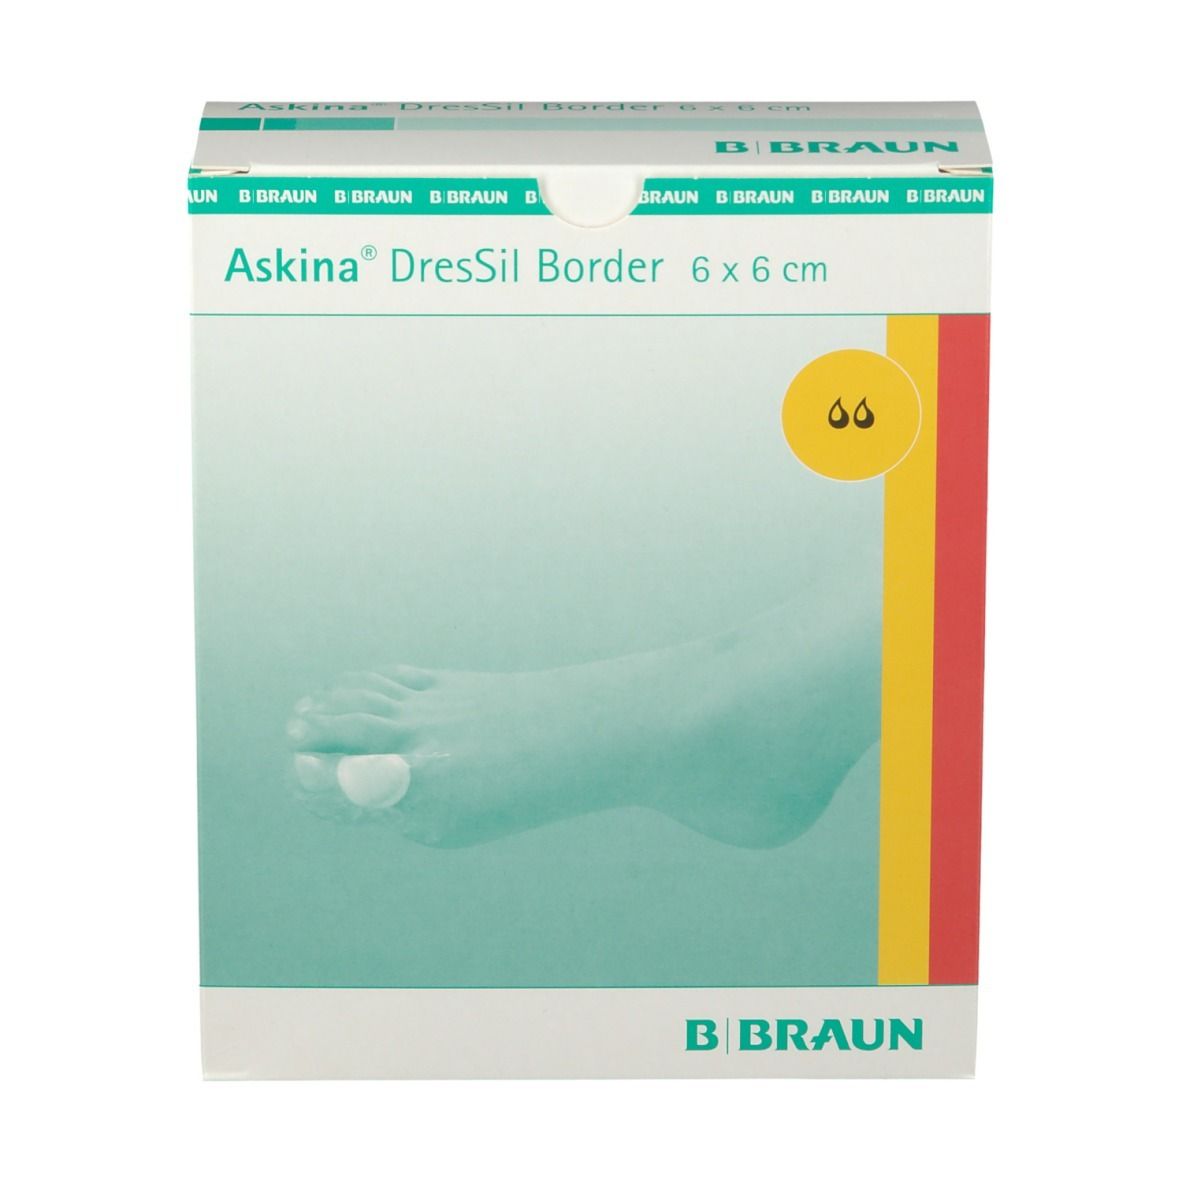 Askina® DresSil Border 6 x 6 cm